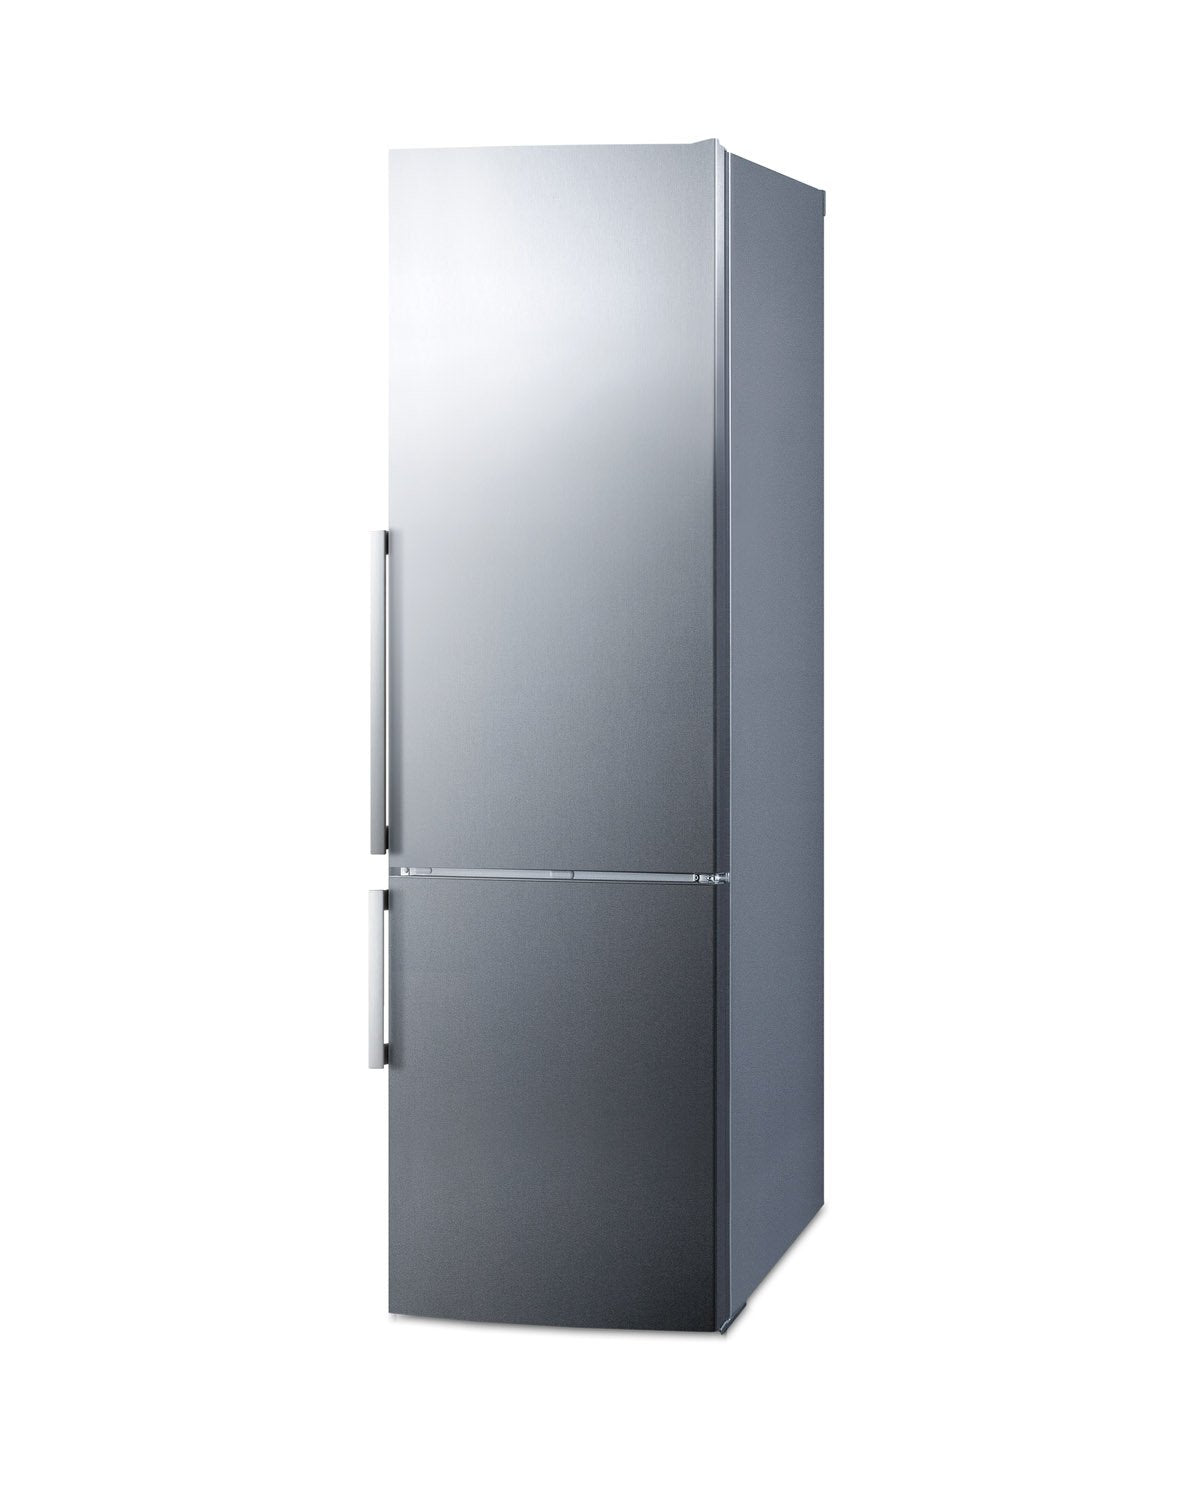 SUMMIT 24 in. Counter-Depth Bottom Freezer Refrigerator in Stainless Steel (FFBF246SS)